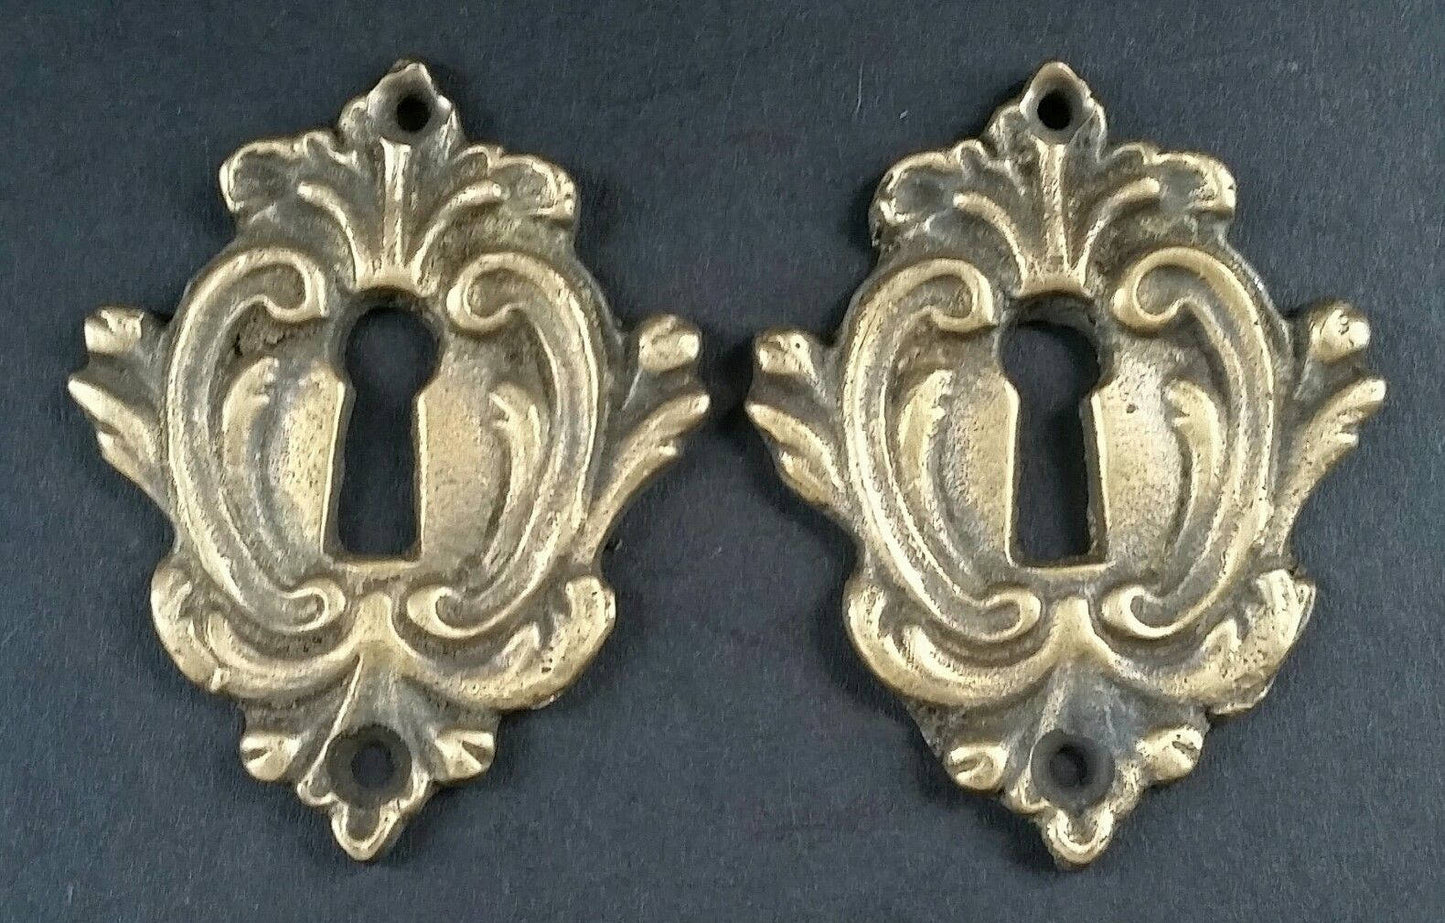 Antique Style French Escutcheons Key Hole Covers E9